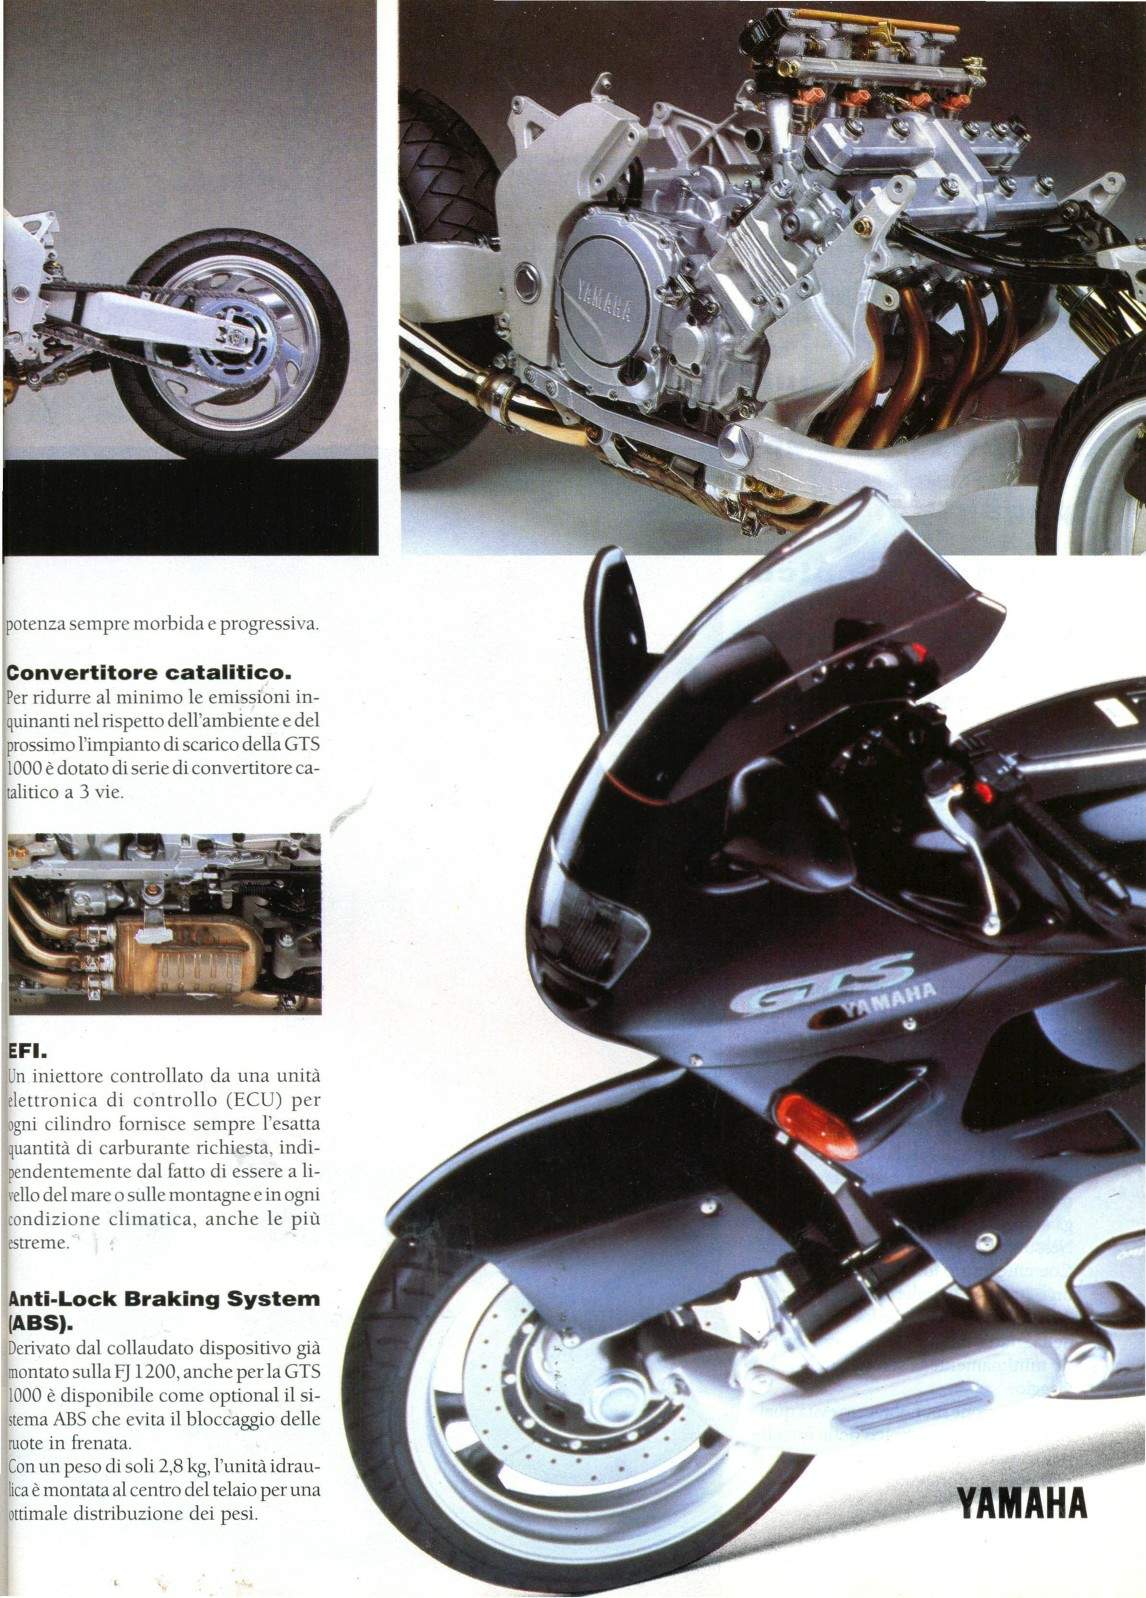 Мотоцикл ямаха xv 1900 stratoliner: обзор, характеристики, отзывы